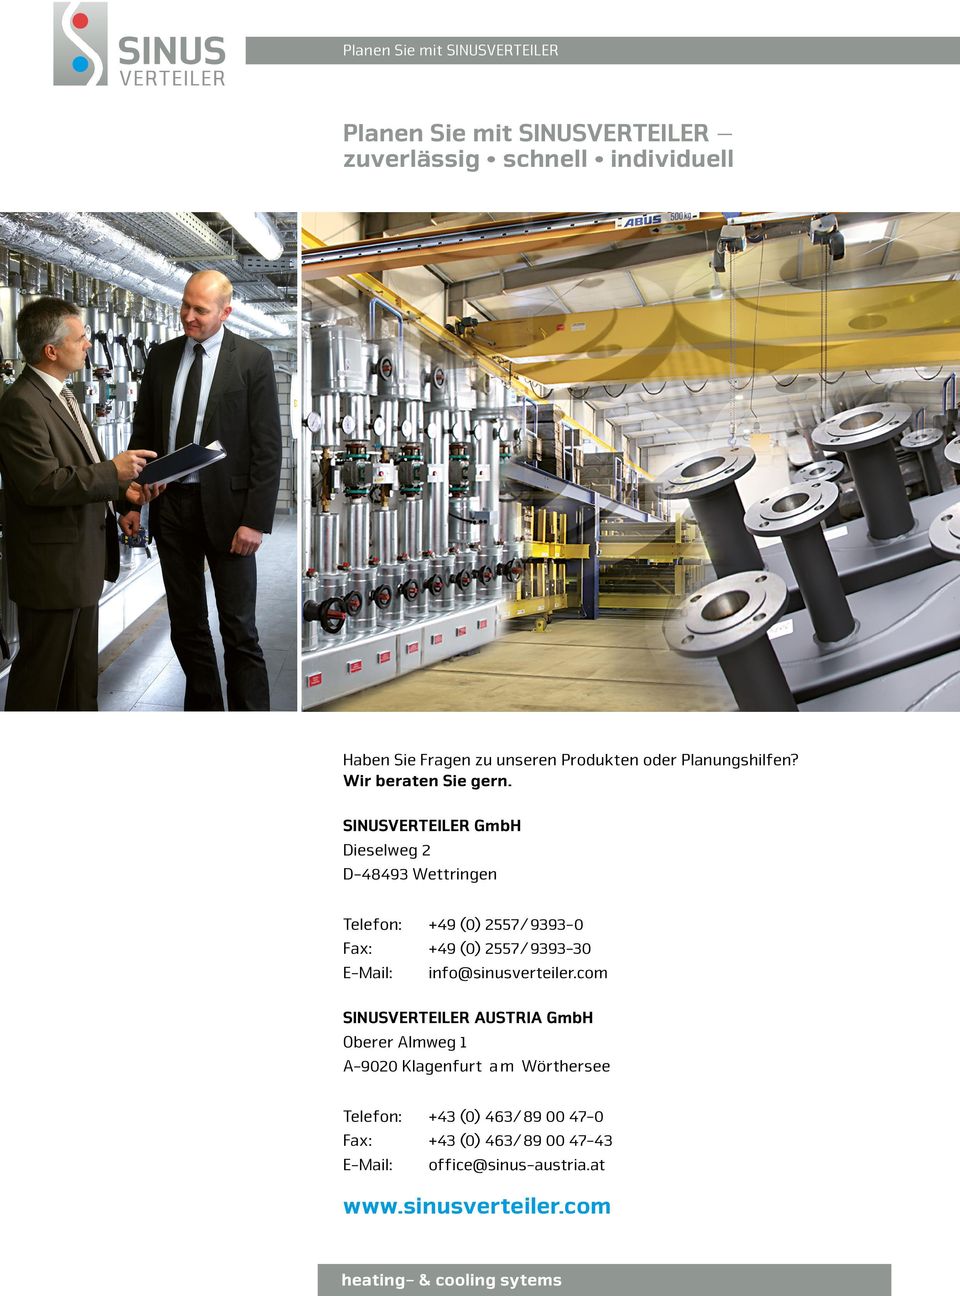 Sinusverteiler GmbH Dieselweg 2 D-48493 Wettringen Telefon: +49 (0) 2557/9393-0 Fax: +49 (0) 2557/9393-30 E-Mail: